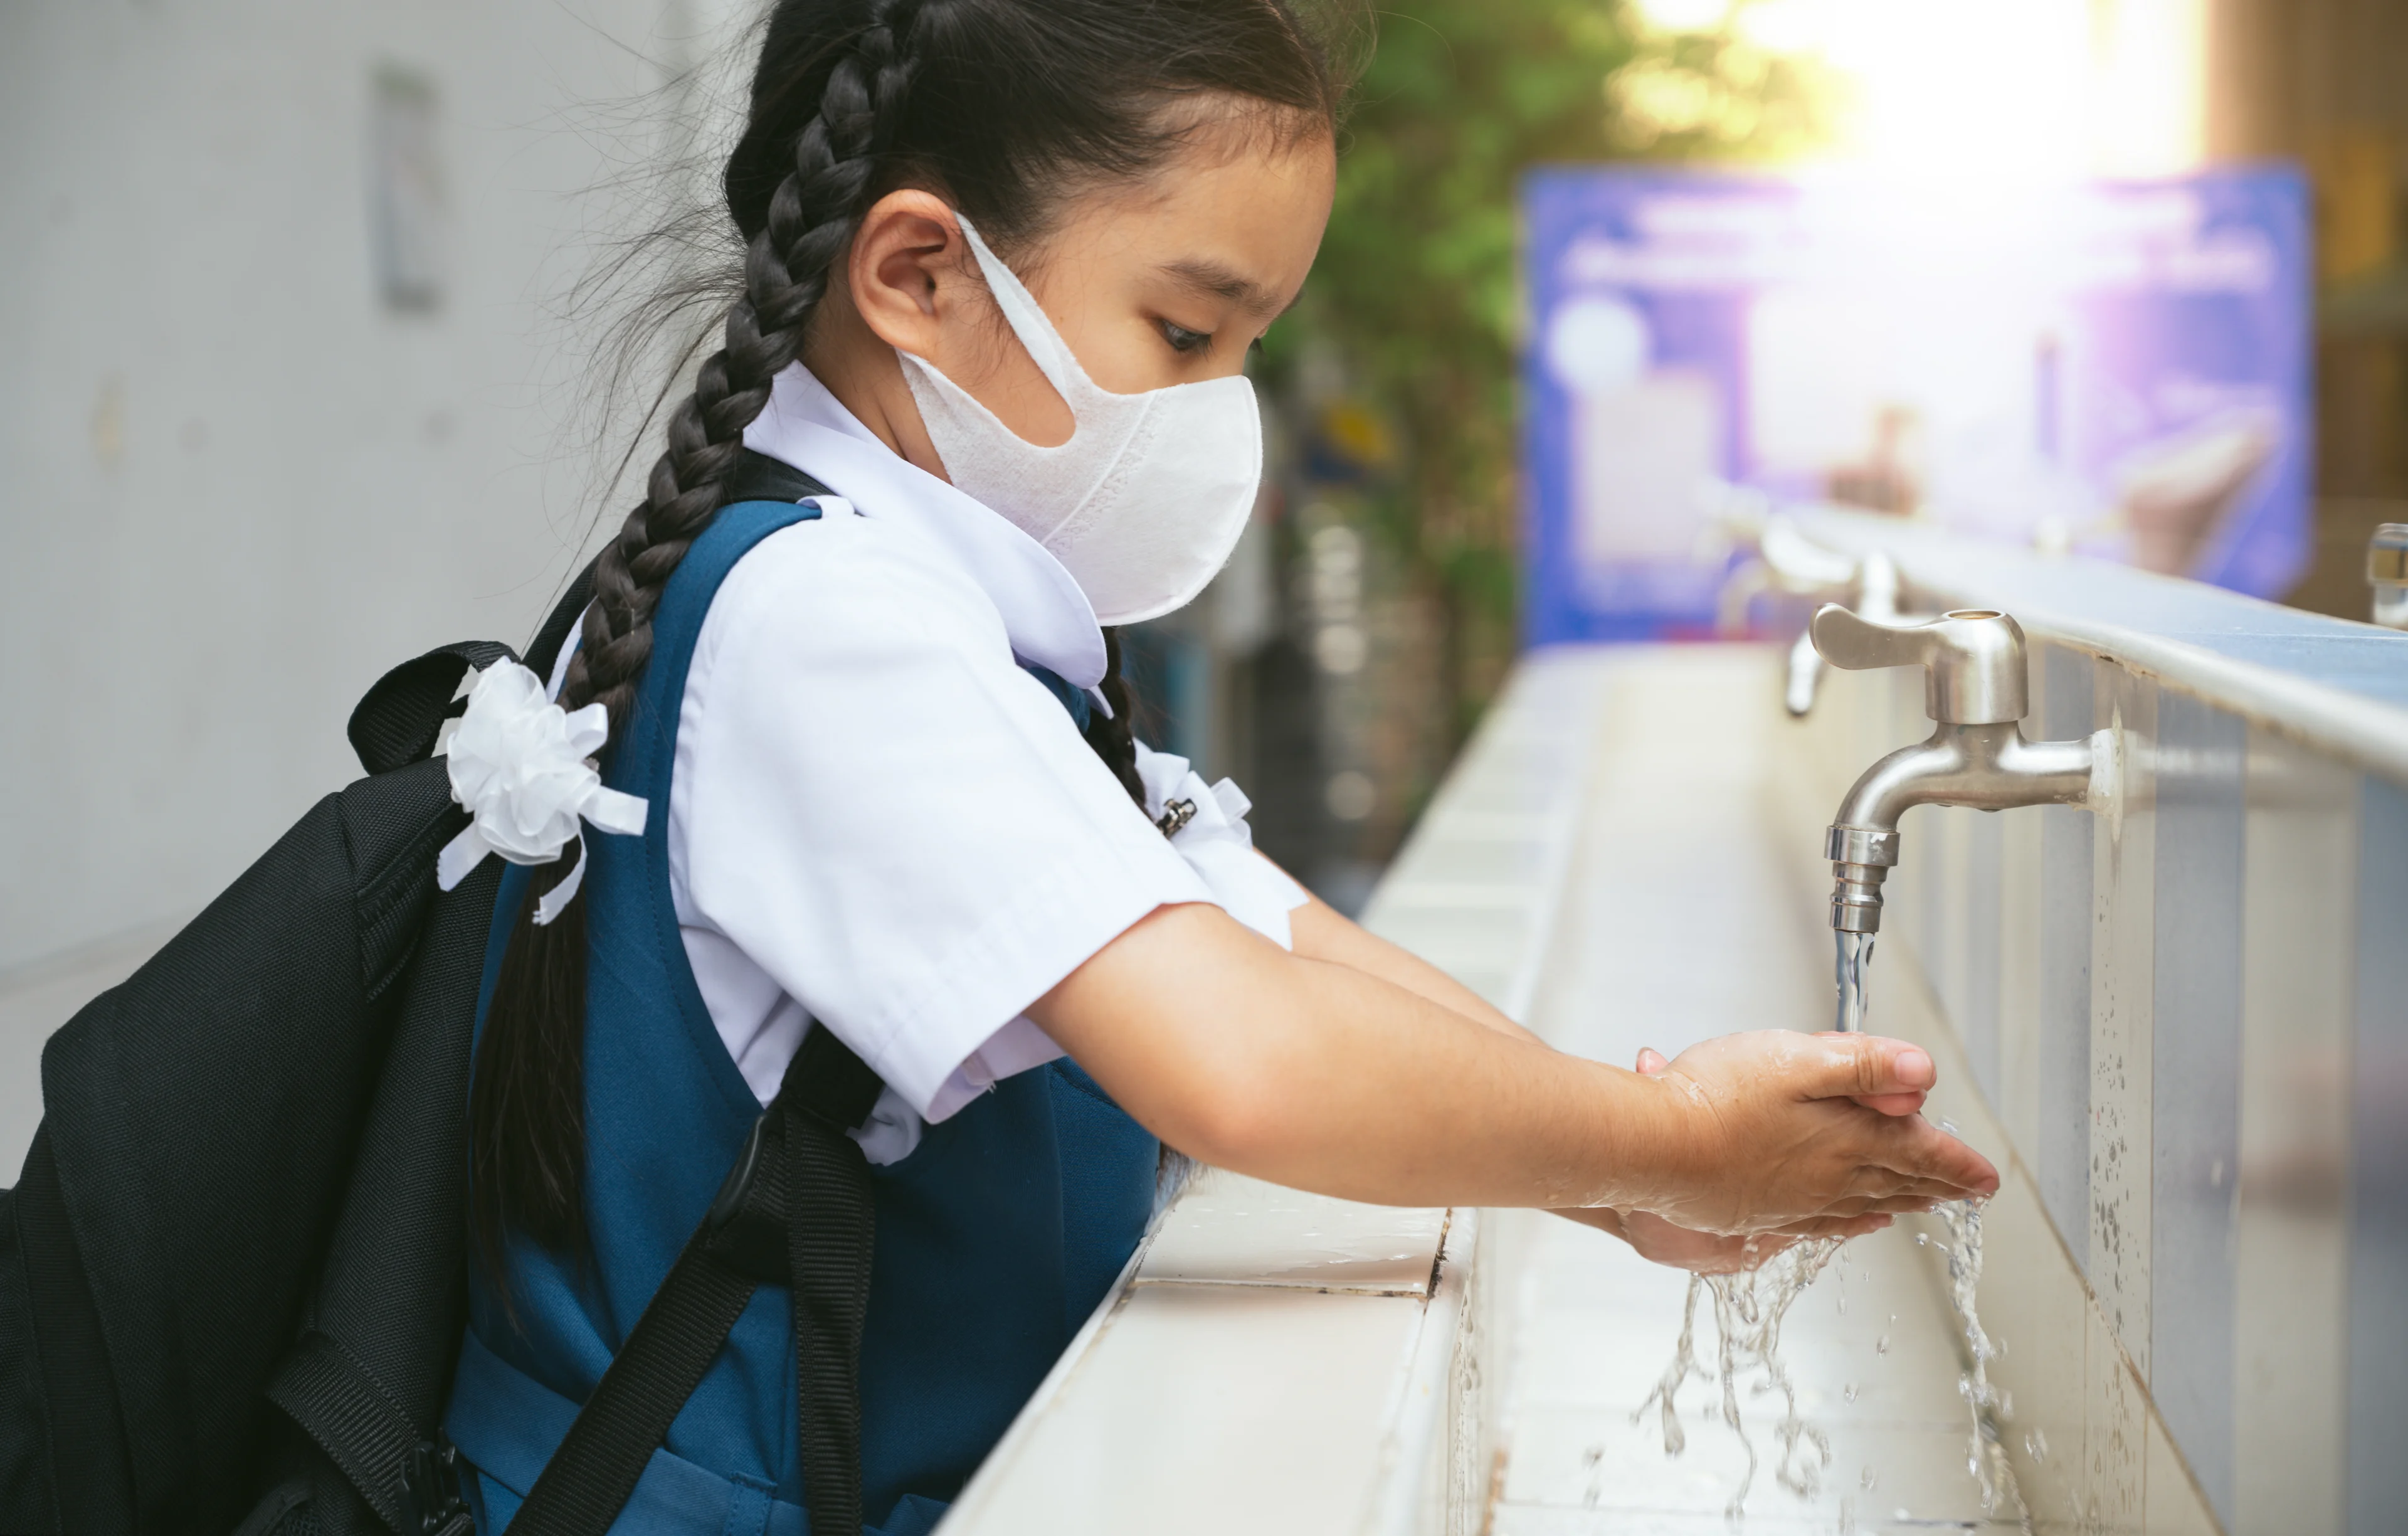 Elementary school aged girl washing hands